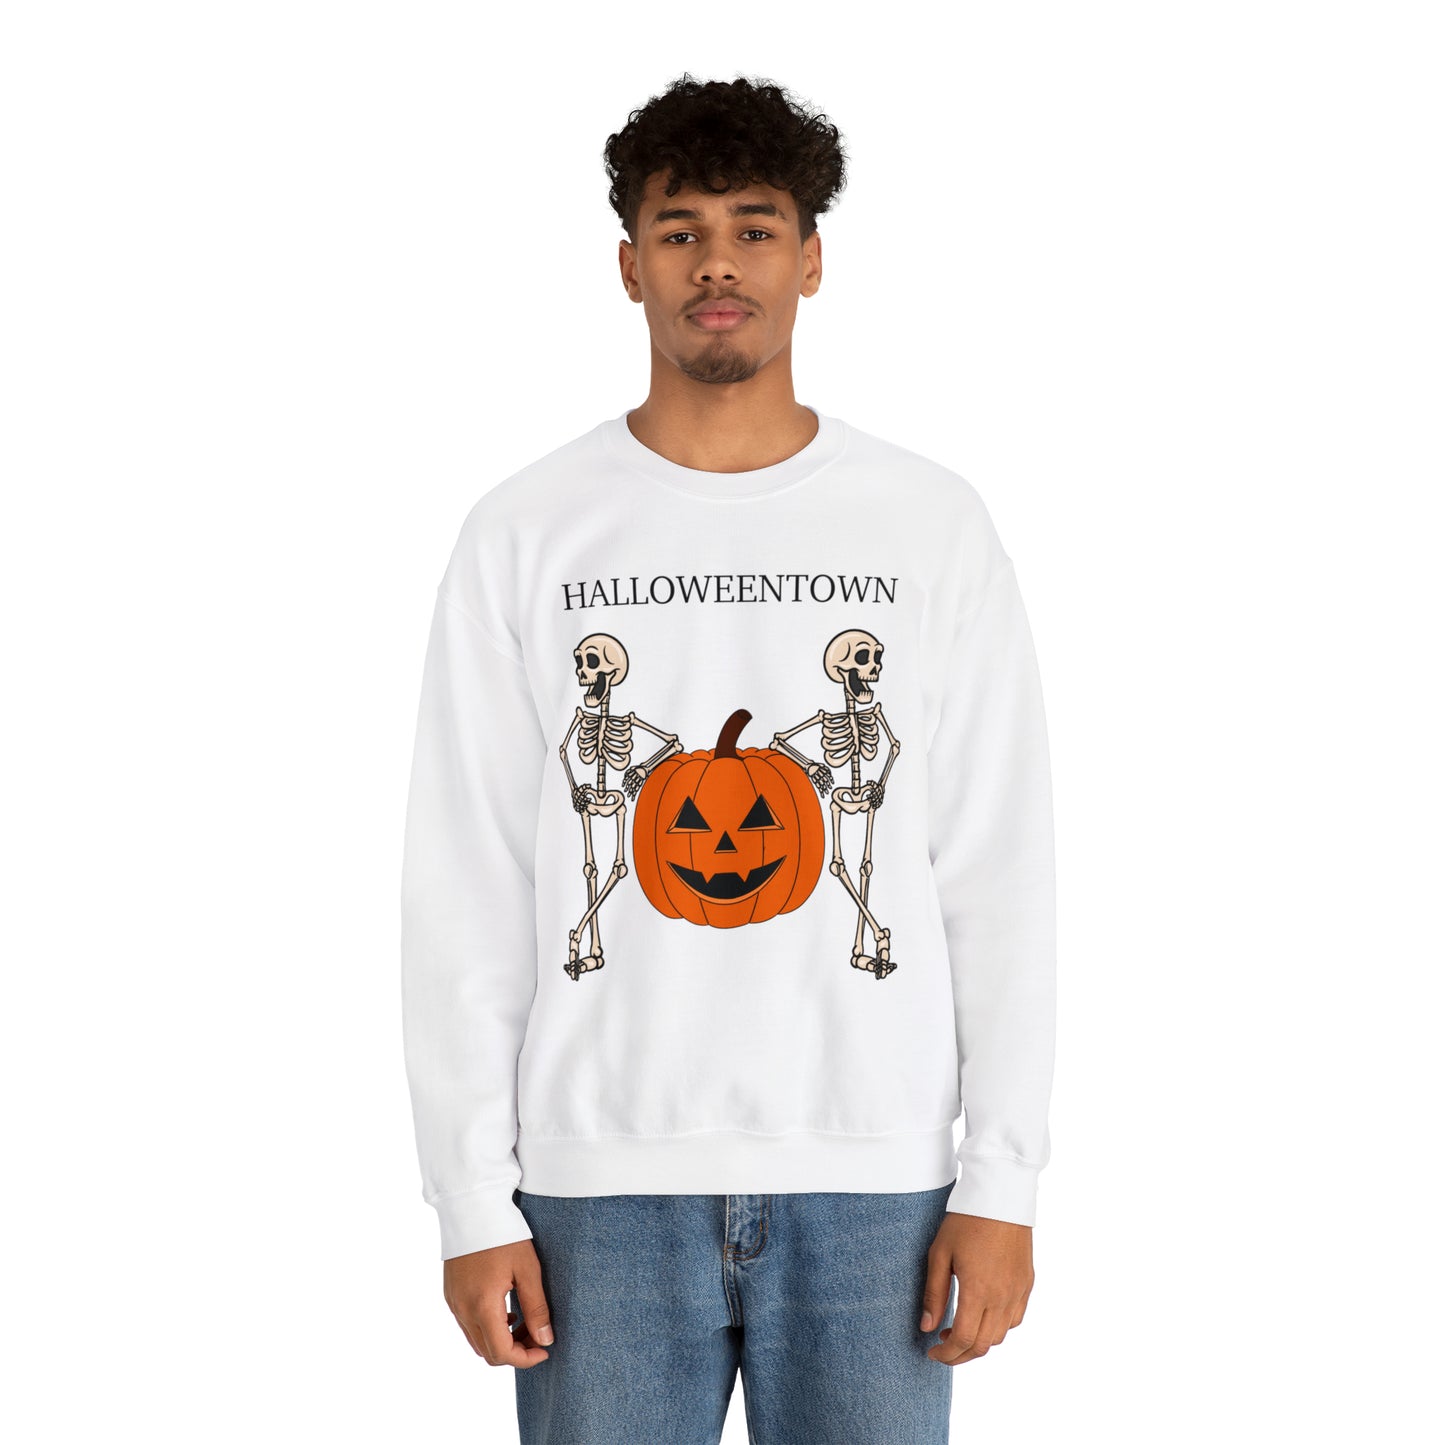 Unisex Heavy Blend™ Halloweentown Crewneck Sweatshirt